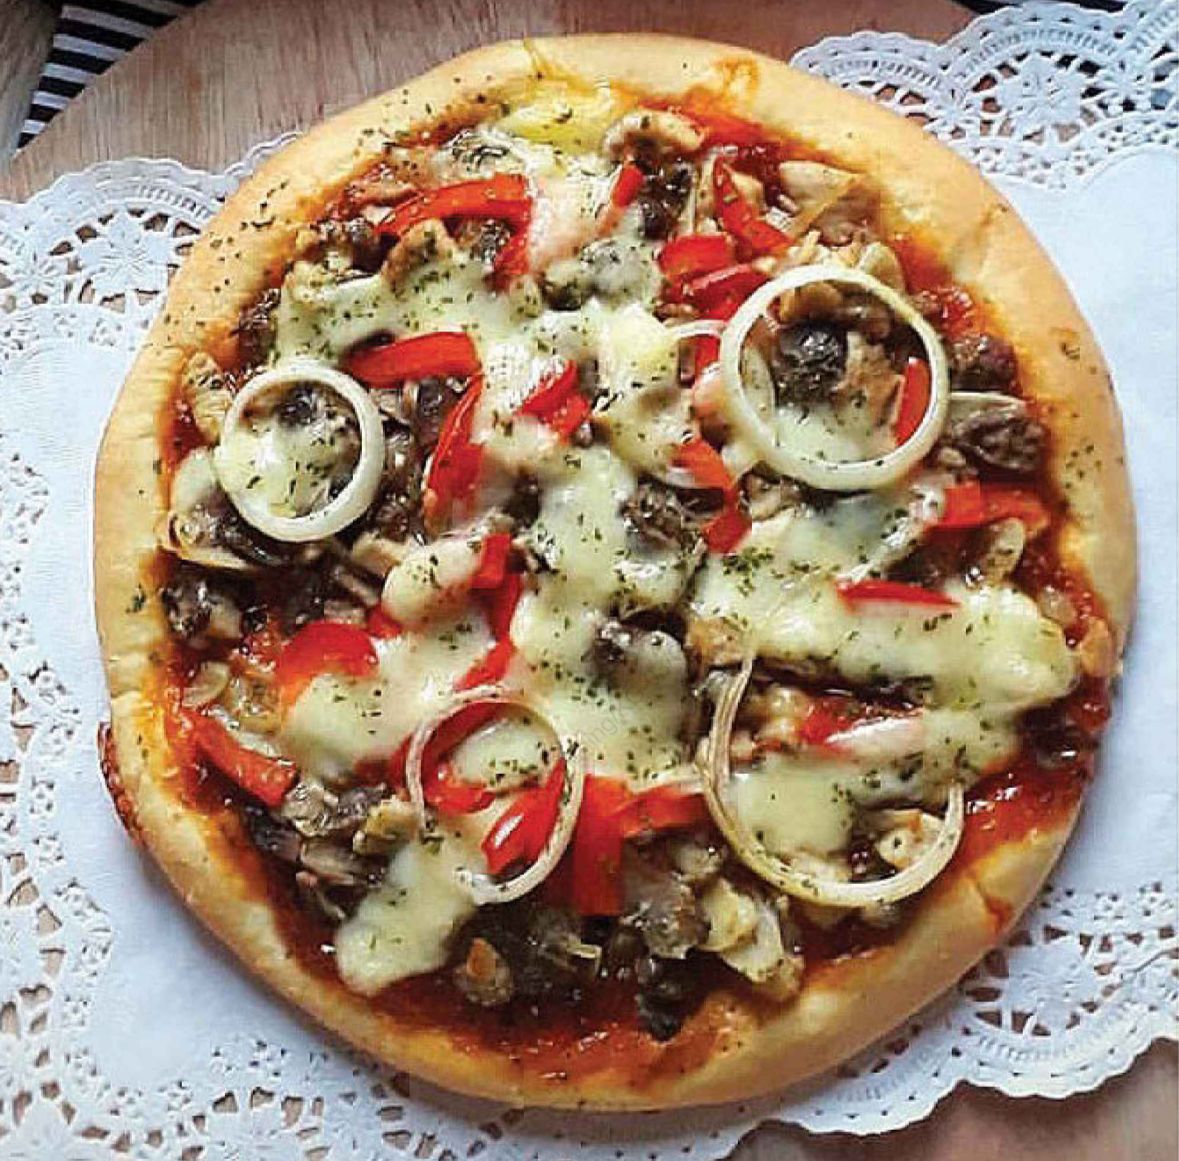 Resep Pizza Homemade yang Sederhana, Enak dan Mudah Diikuti Bagi Pemula